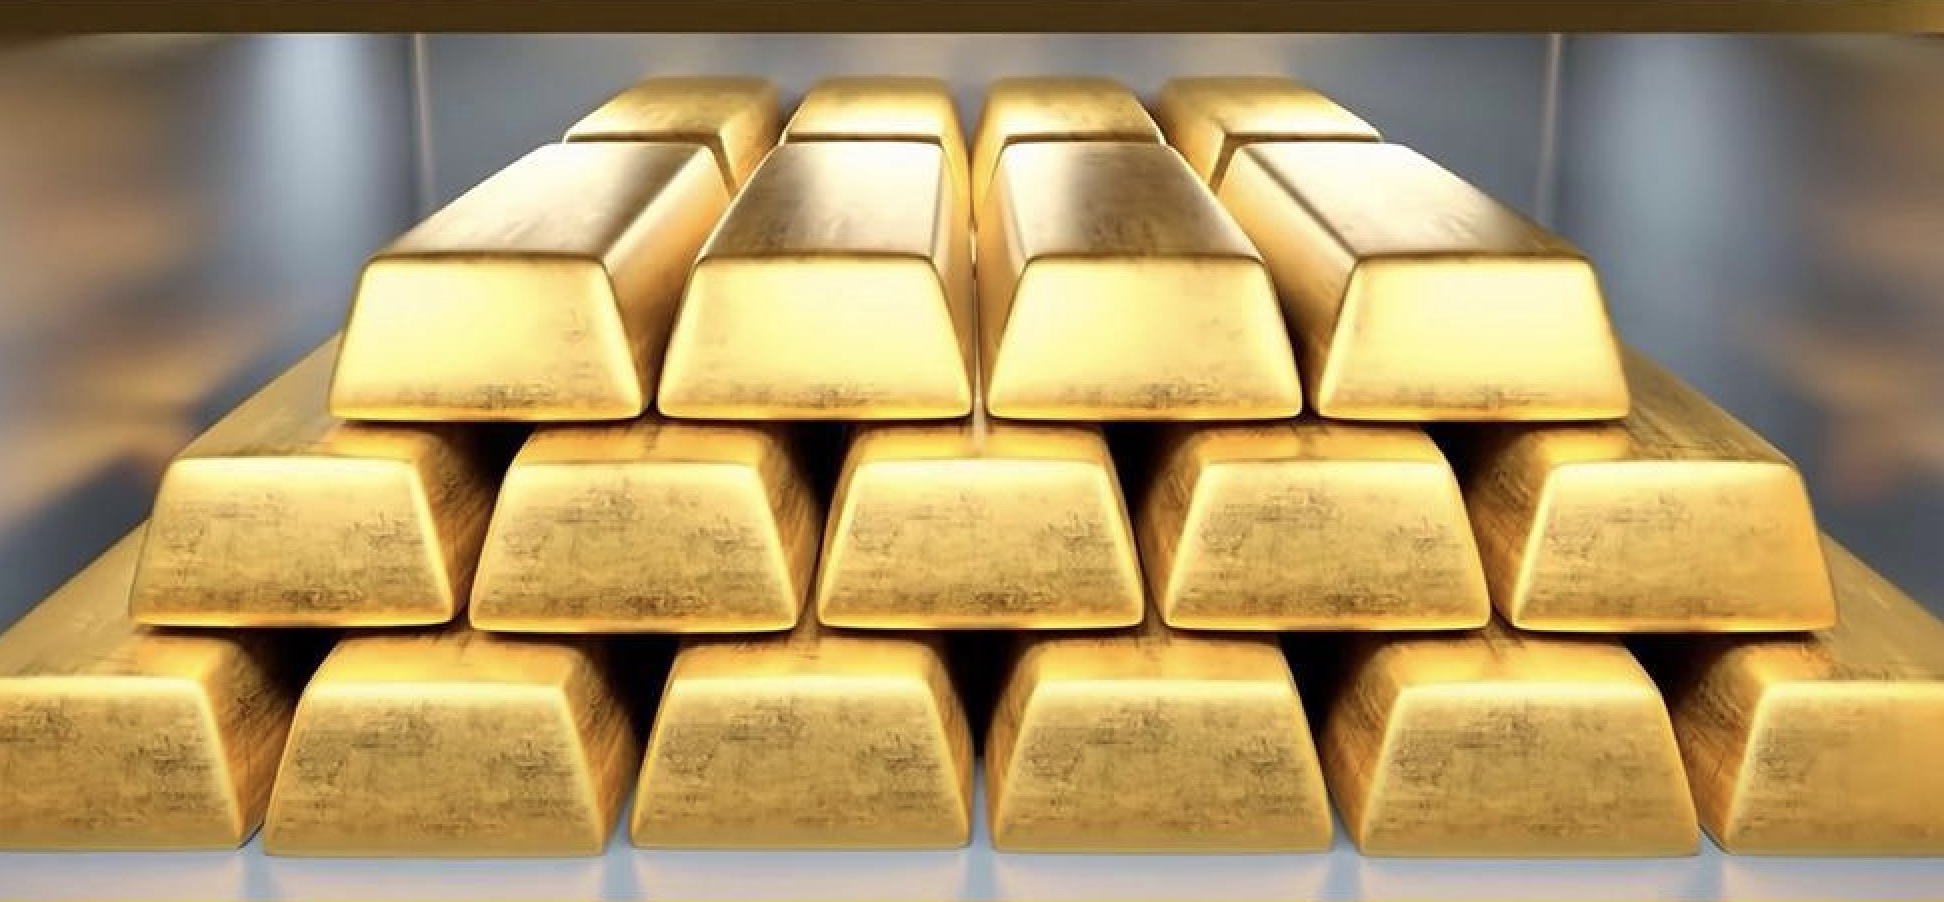 Pengingat perdagangan emas: Ketegangan di Timur Tengah telah membantu harga emas membukukan positif selama lima minggu berturut-turut, dan 70% analis optimis terhadap prospek pasar.